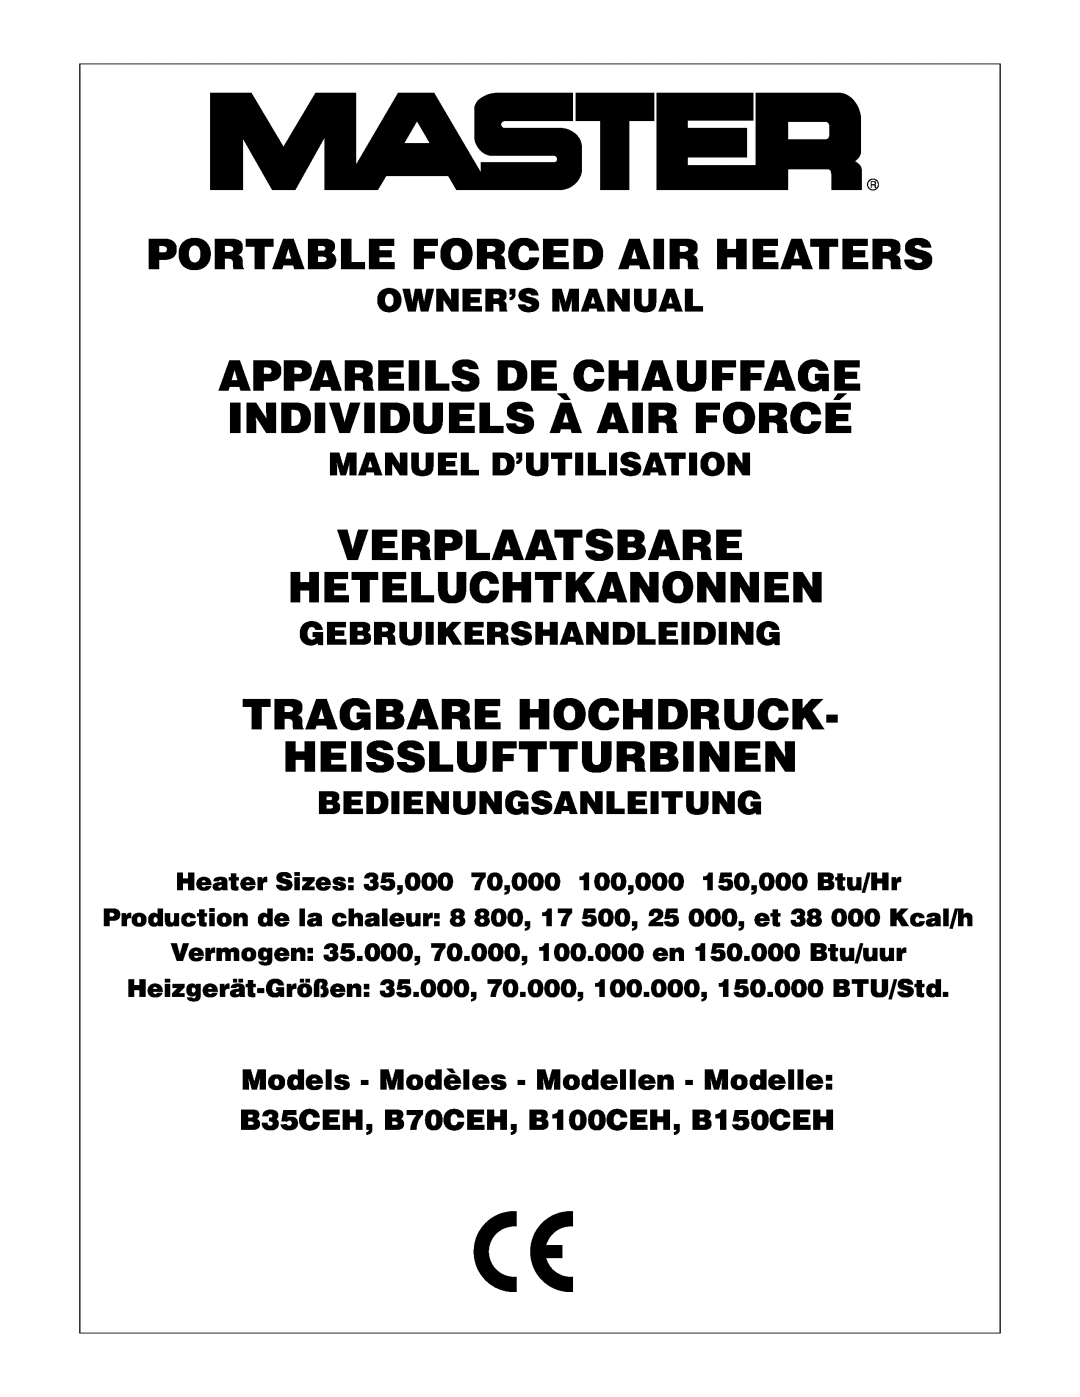 Master Lock B35CEH, B70CEH owner manual Portable Forced Air Heaters, Appareils De Chauffage Individuels À Air Forcé 